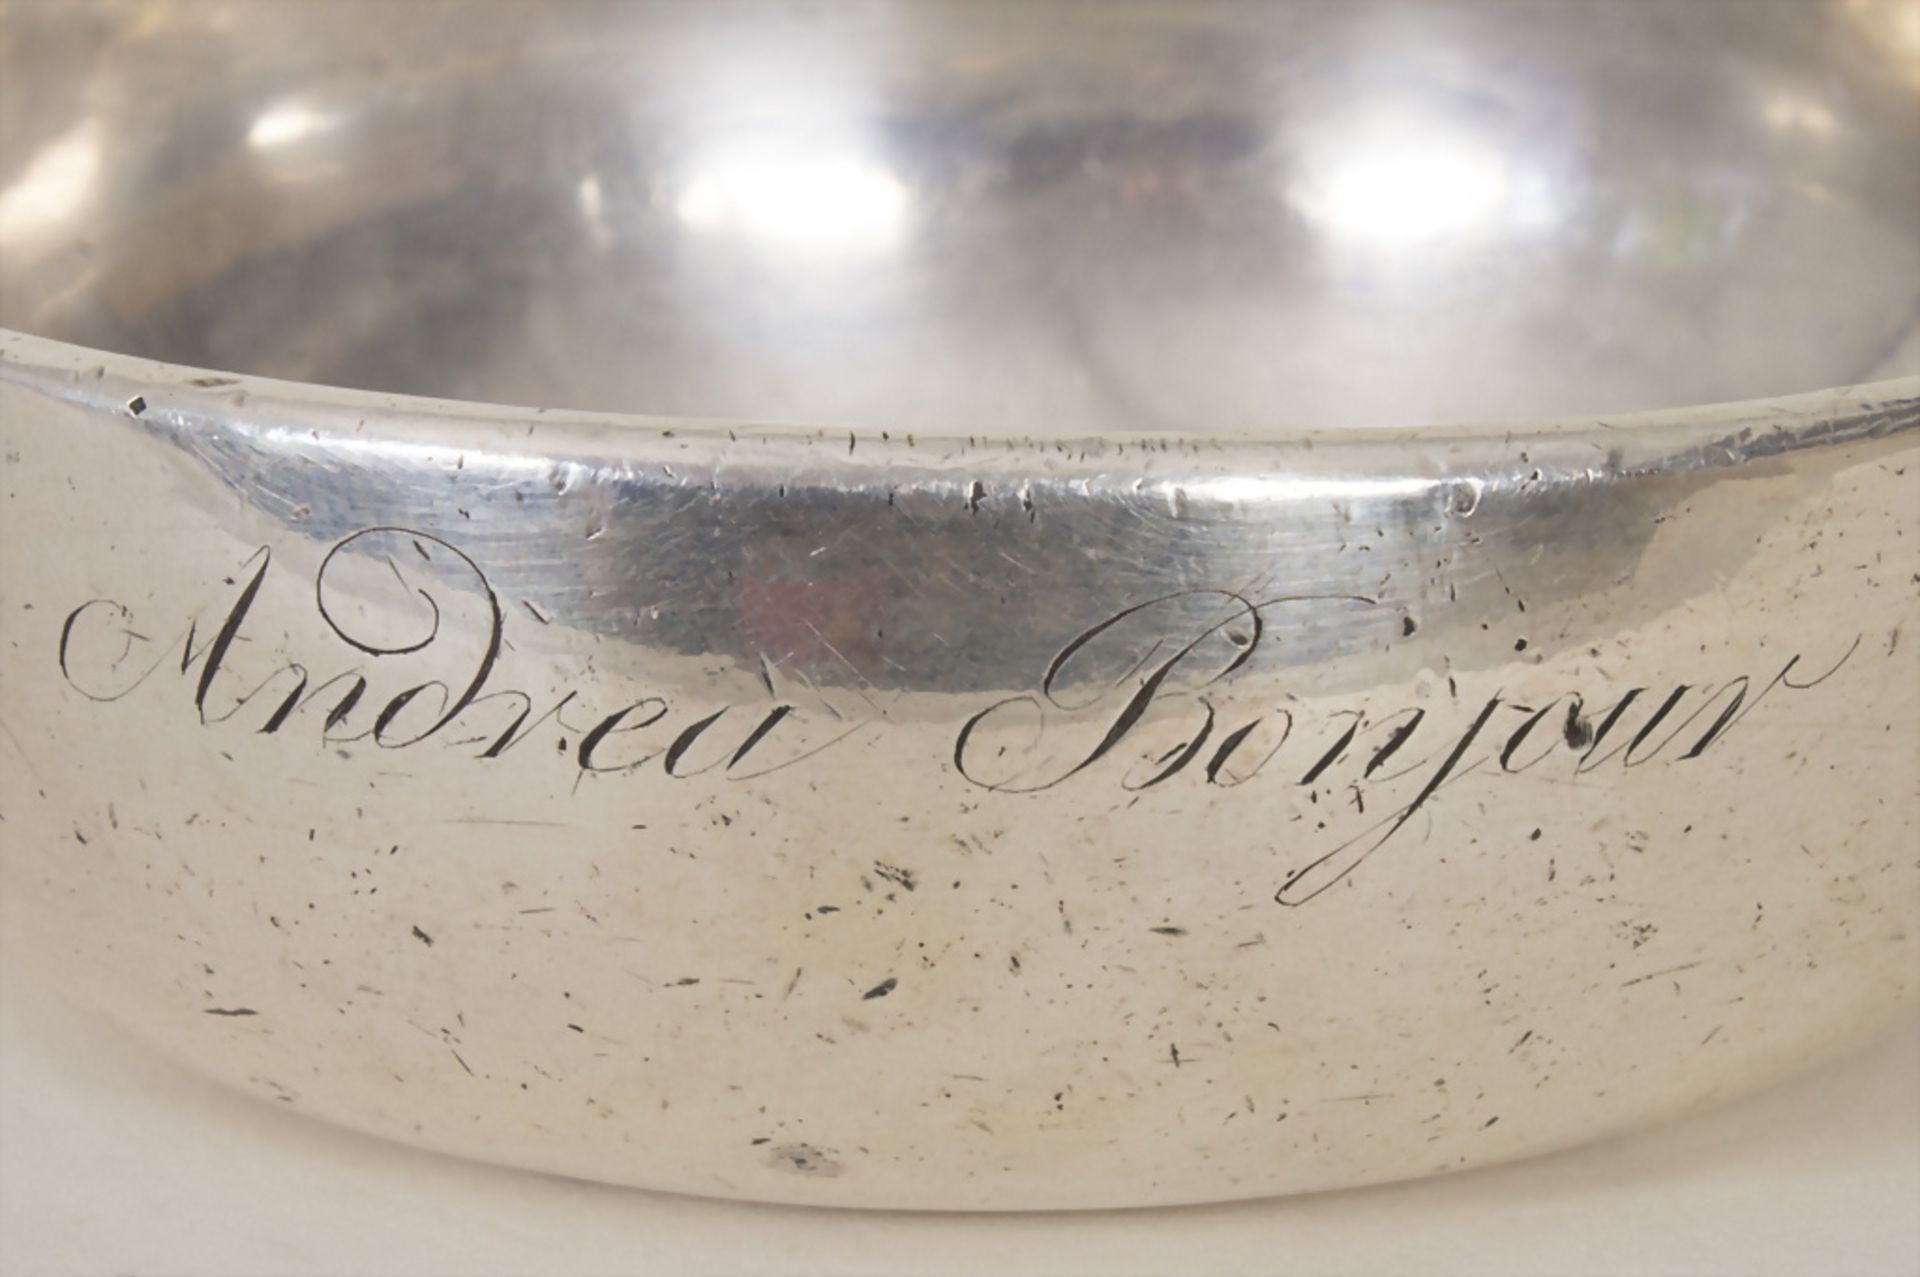 Weinprobierschale / A test vin / A silver wine tasting bowl, Pierre-Jean Meunier, Paris, um 1820 - Image 2 of 5